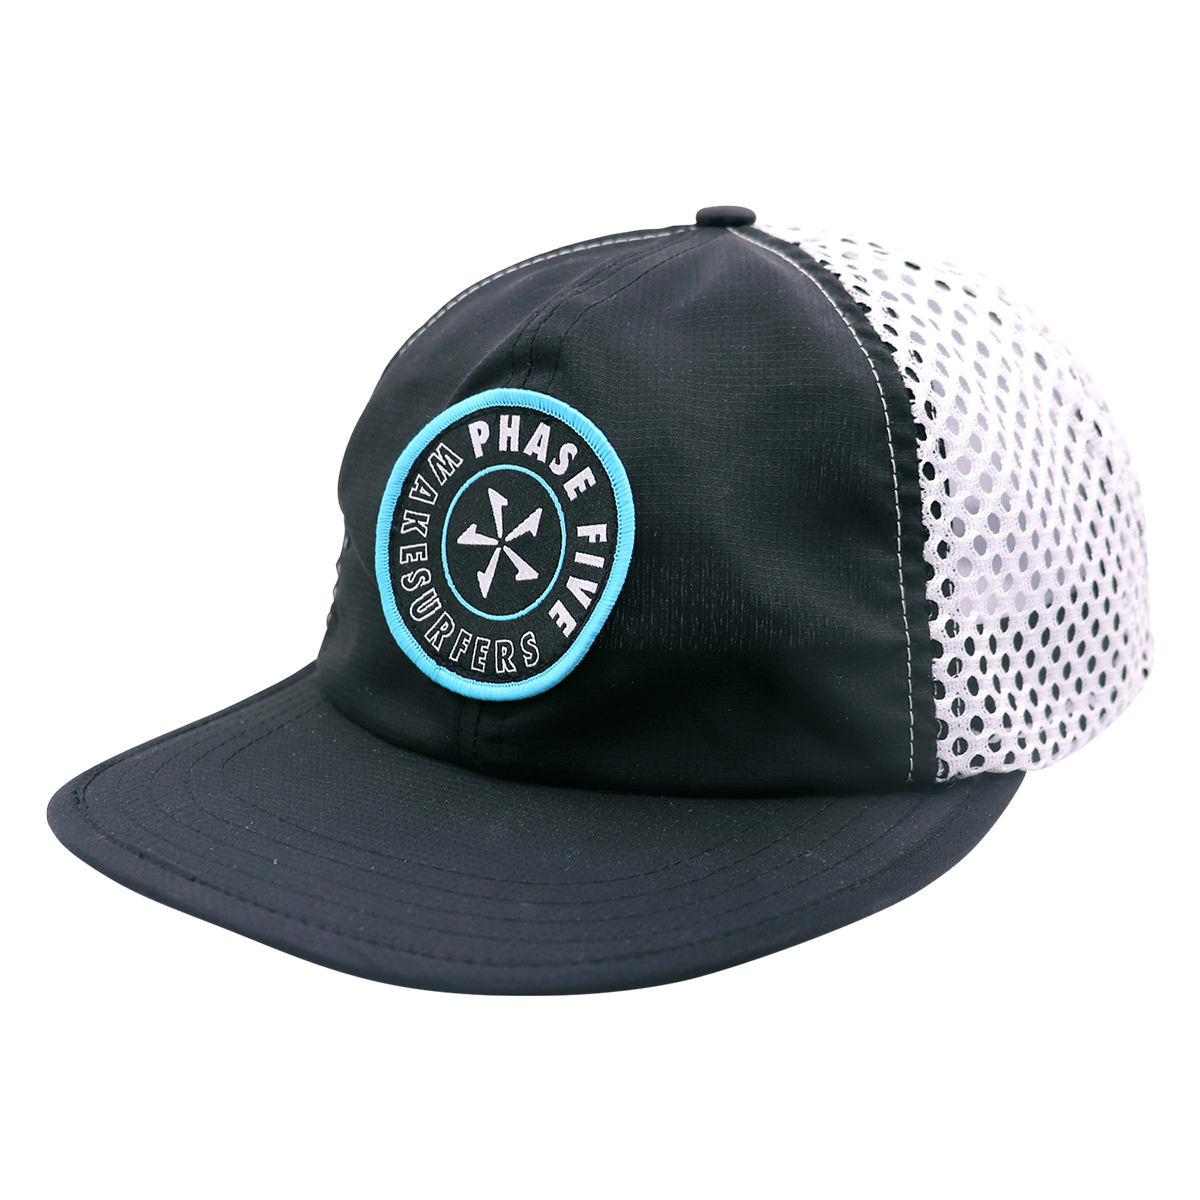 Phase 5 Circle Nylon Mesh hat in Black - BoardCo